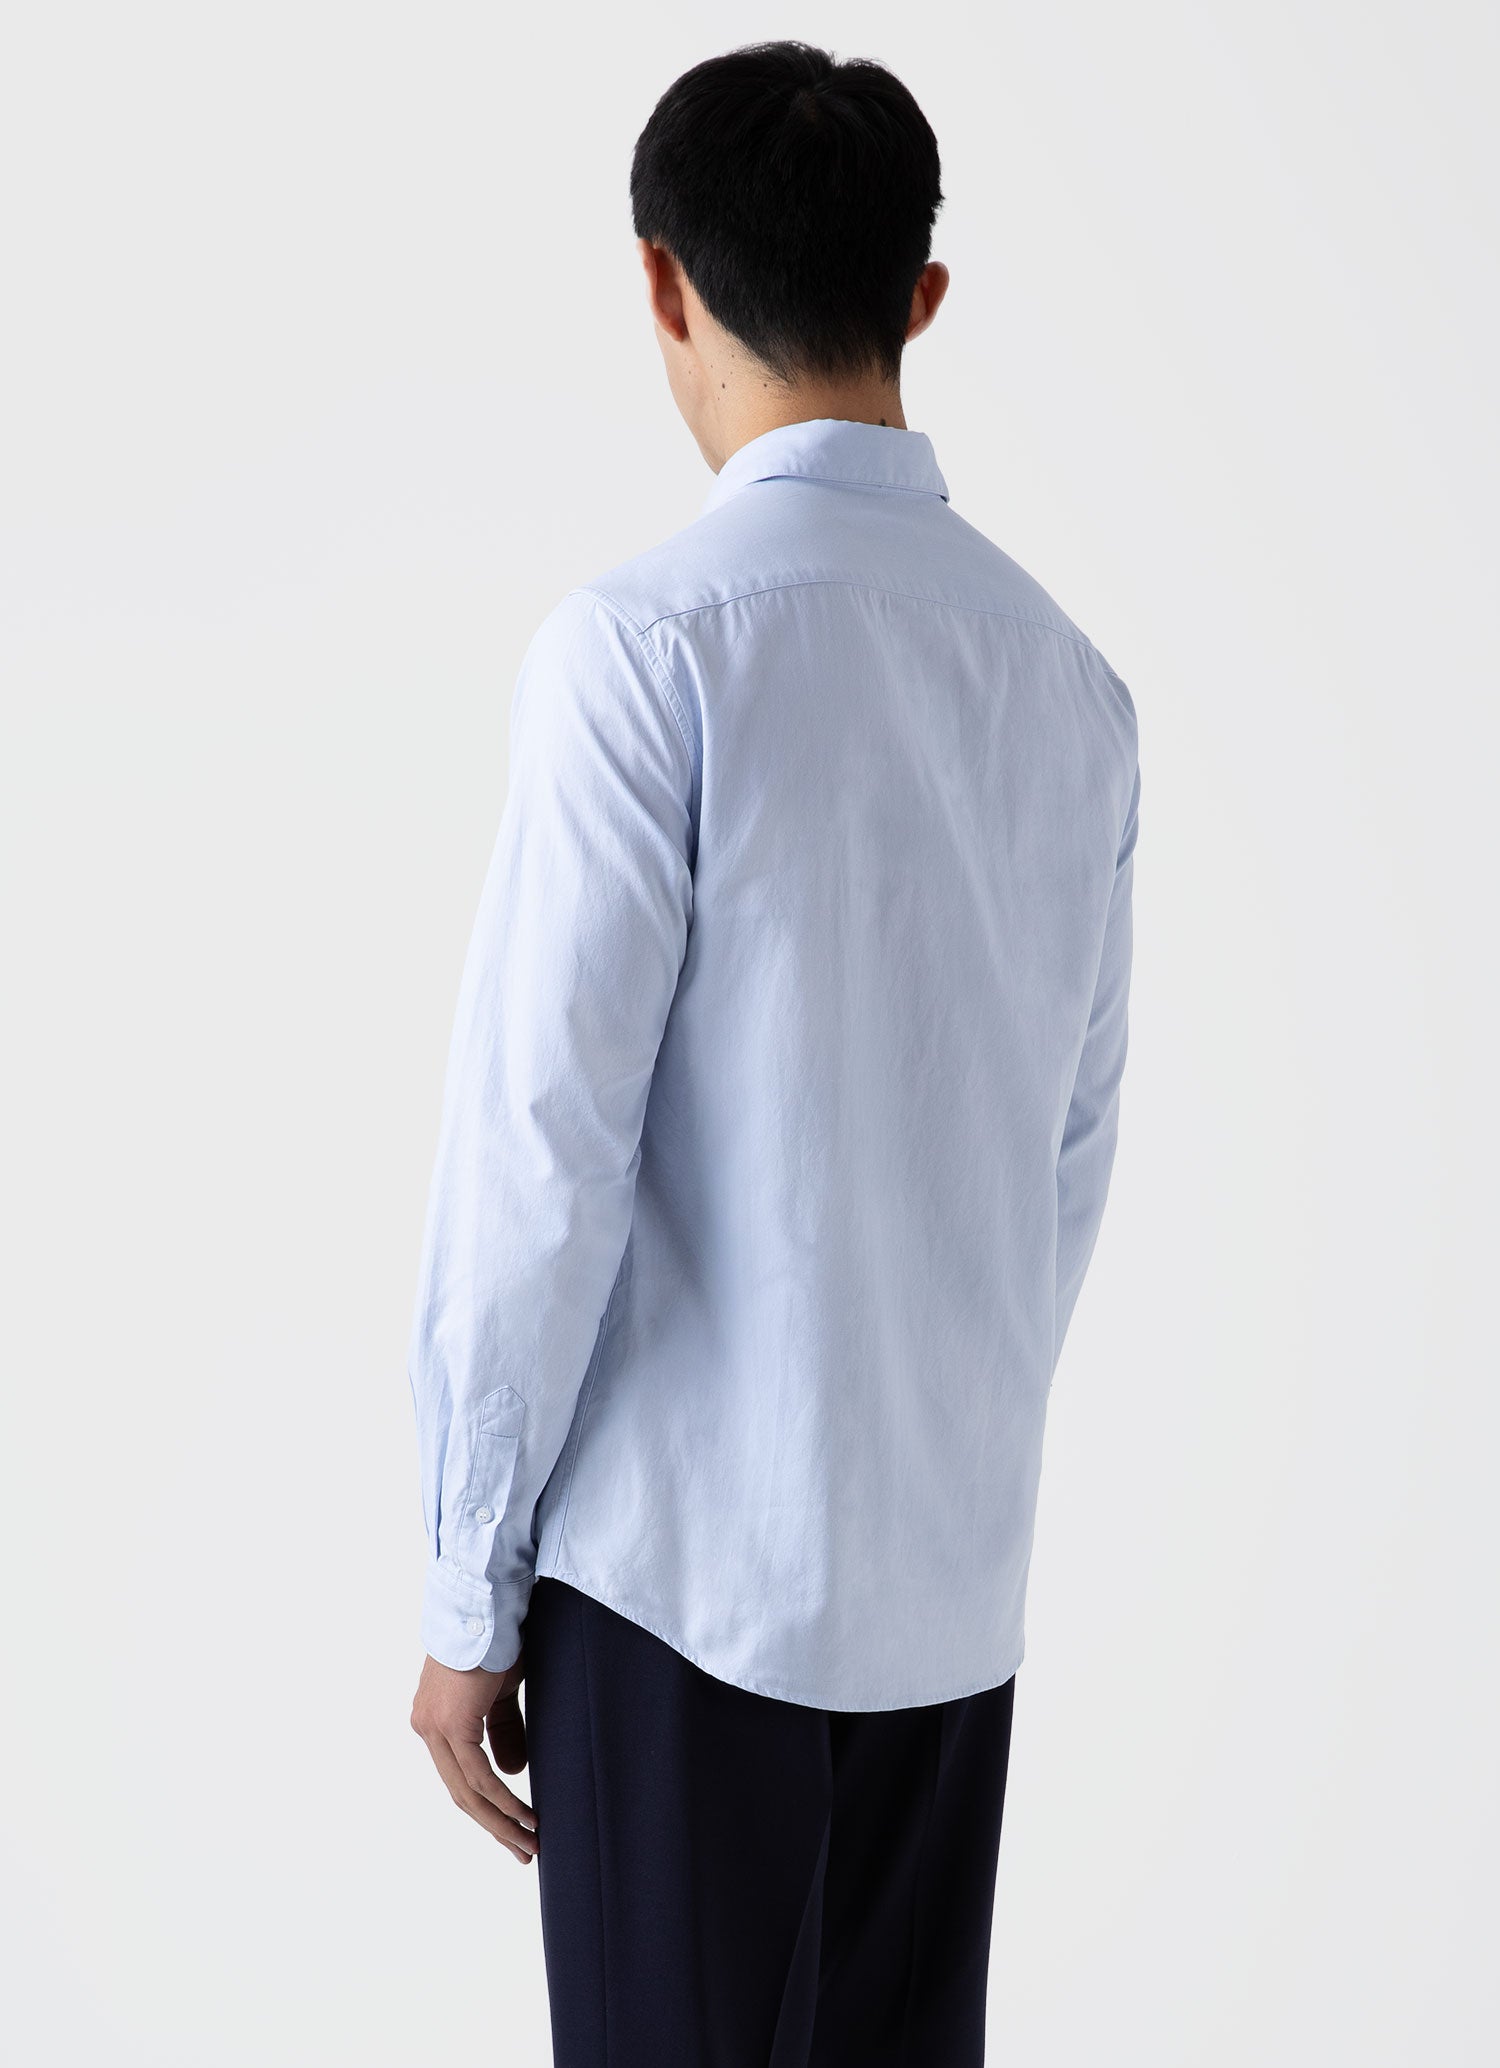 Men's Oxford Shirt in Light Blue | Sunspel